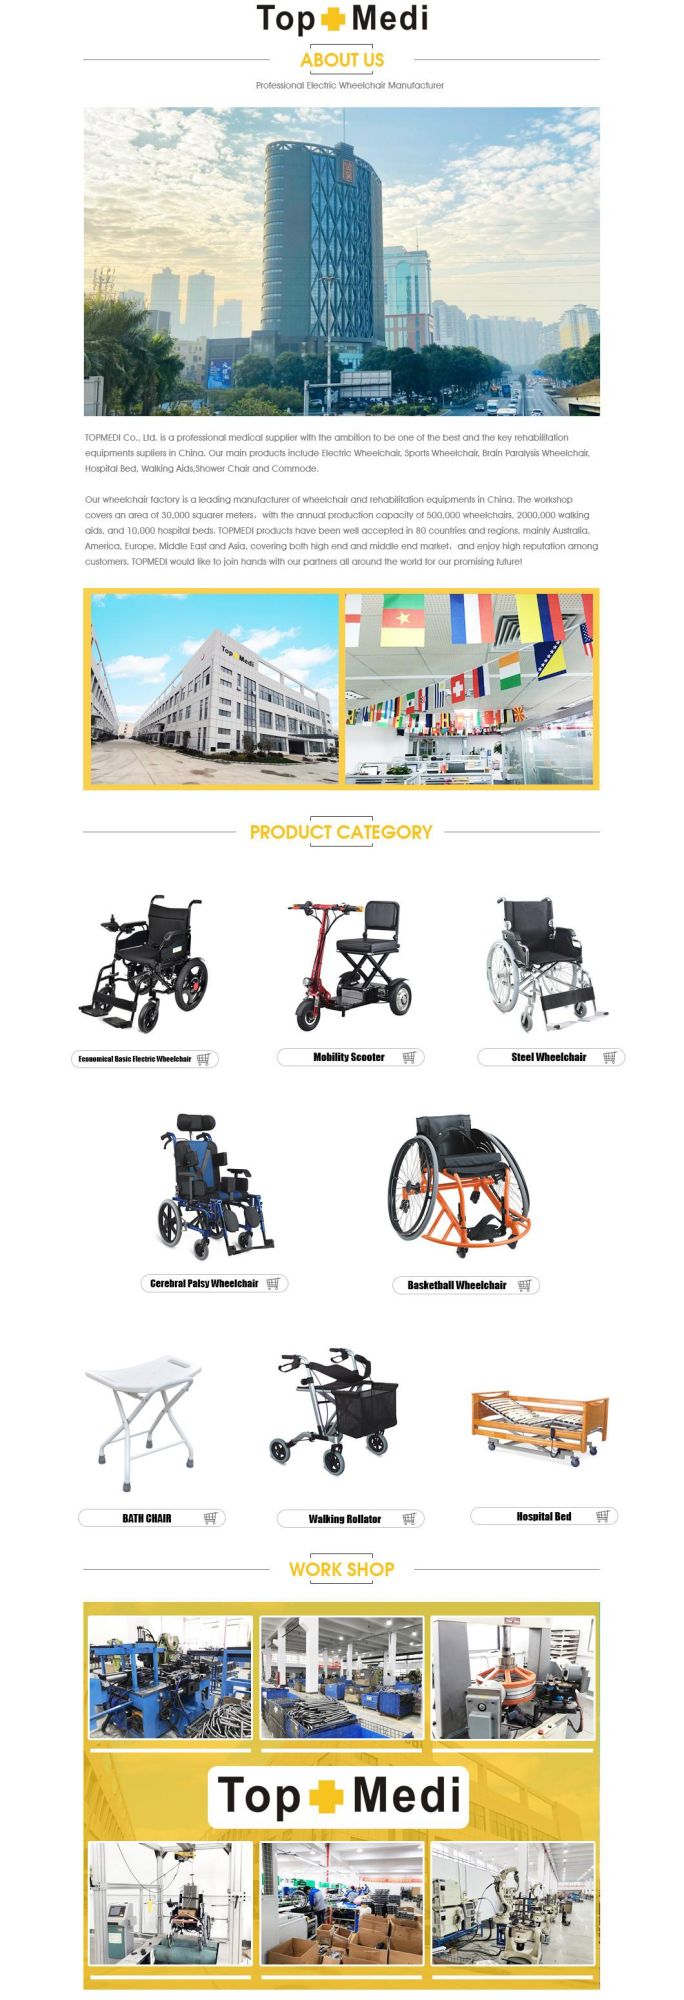 Topmedi Aluminium Alloy Light Weight Foldable Manual Wheelchair